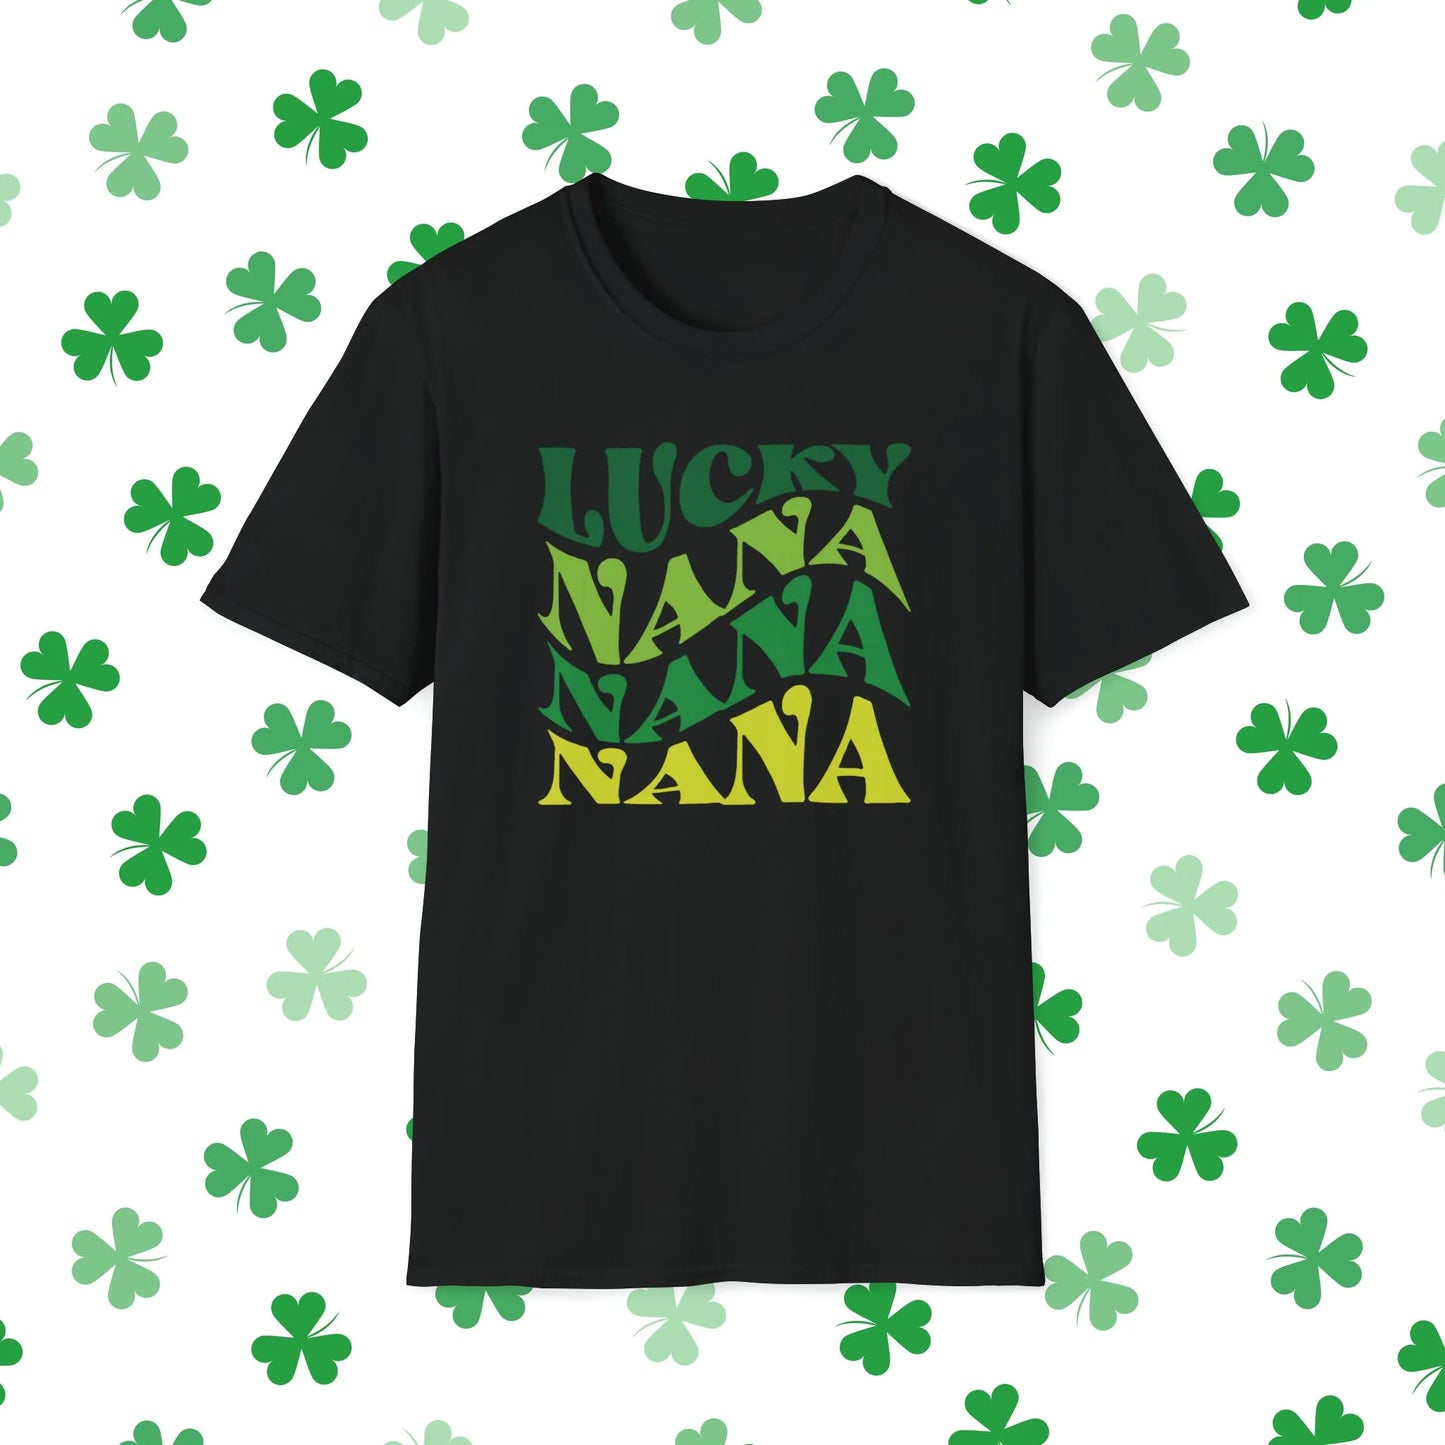 Lucky Nana Nana Nana Retro-Style St. Patrick's Day T-Shirt - Comfort & Charm - St. Patrick's Day Nana Shirt Black